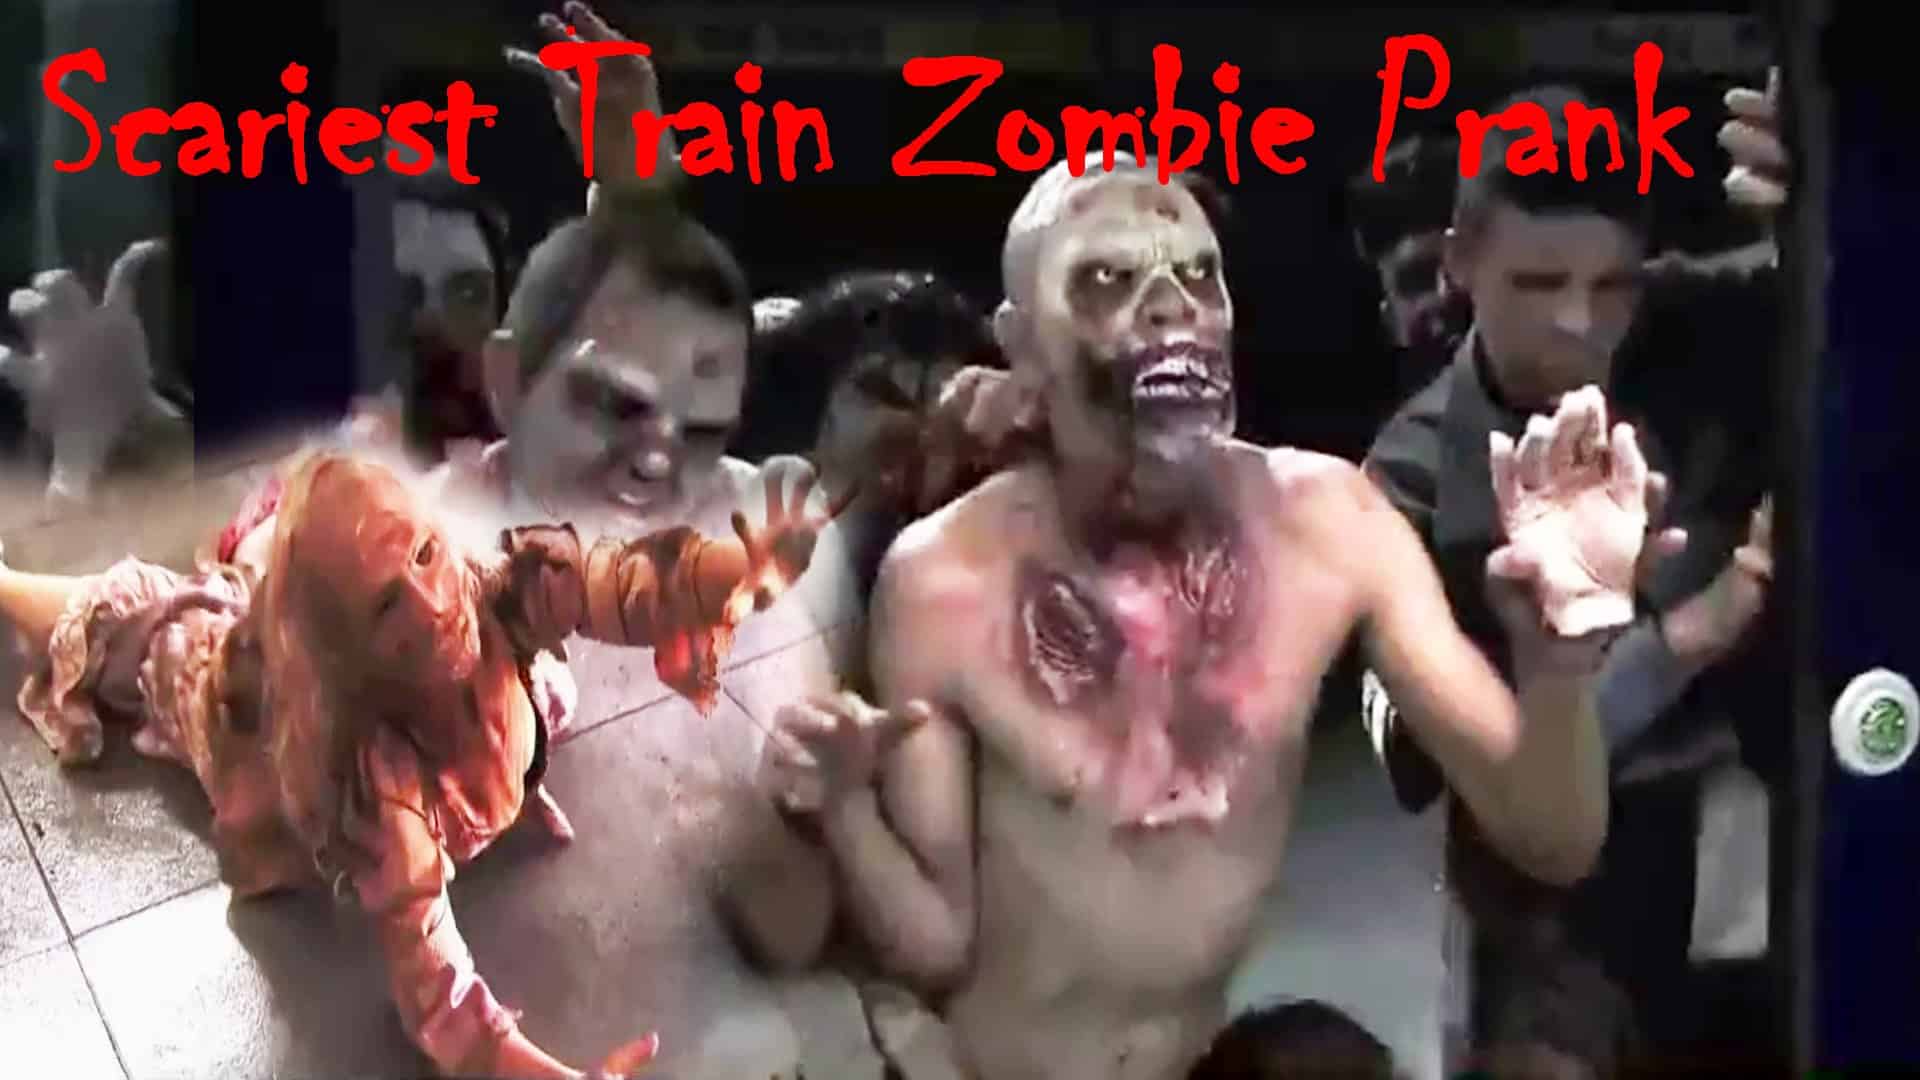 U-Bahn Zombie Streich